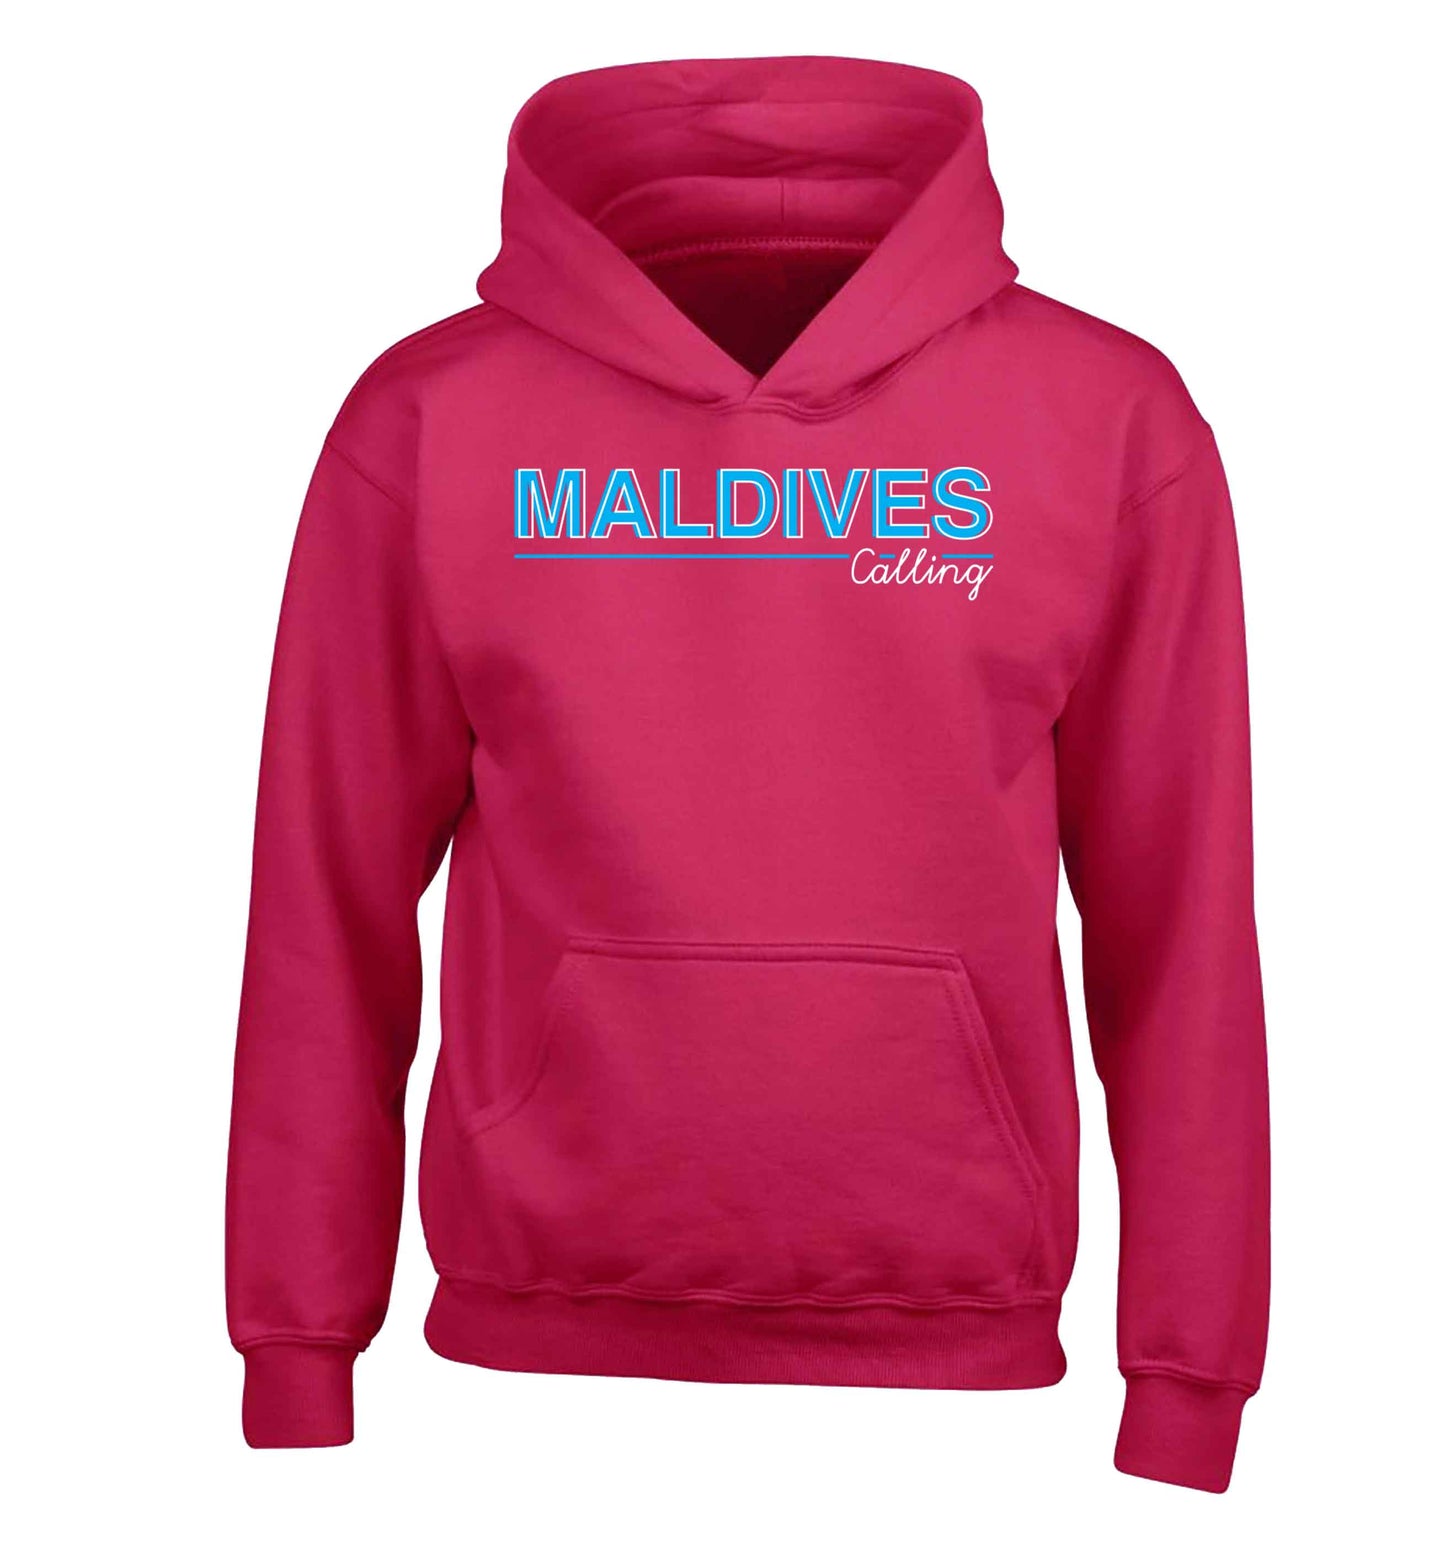 Maldives calling children's pink hoodie 12-13 Years